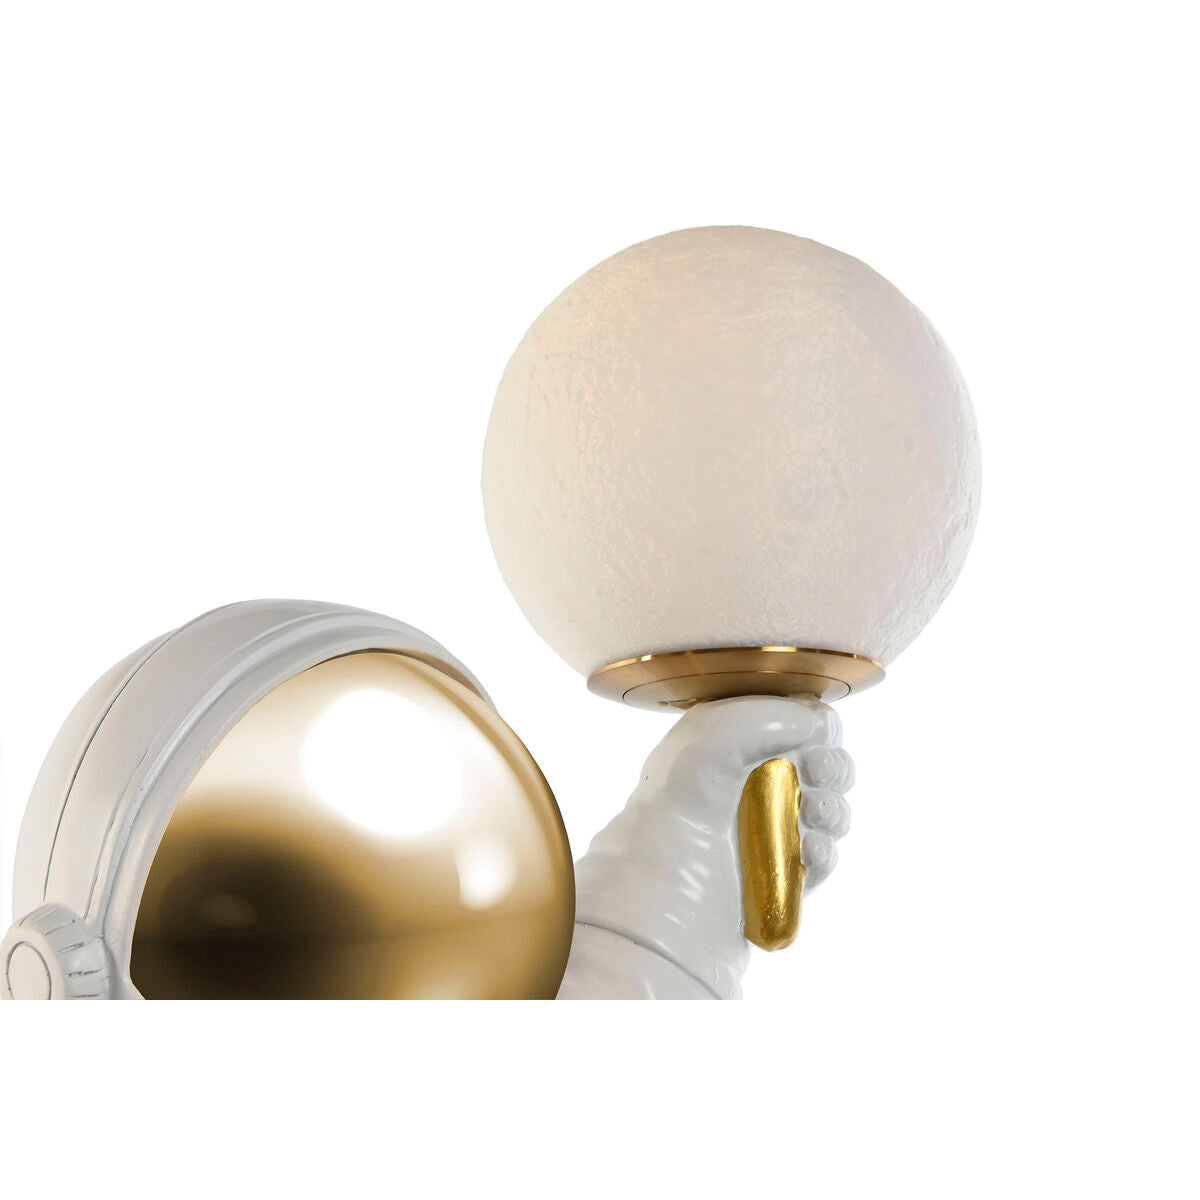 Lampada da Terra Home ESPRIT Bianco Argentato Metallo Resina 50 W 220 V 37 x 37 x 93 cm